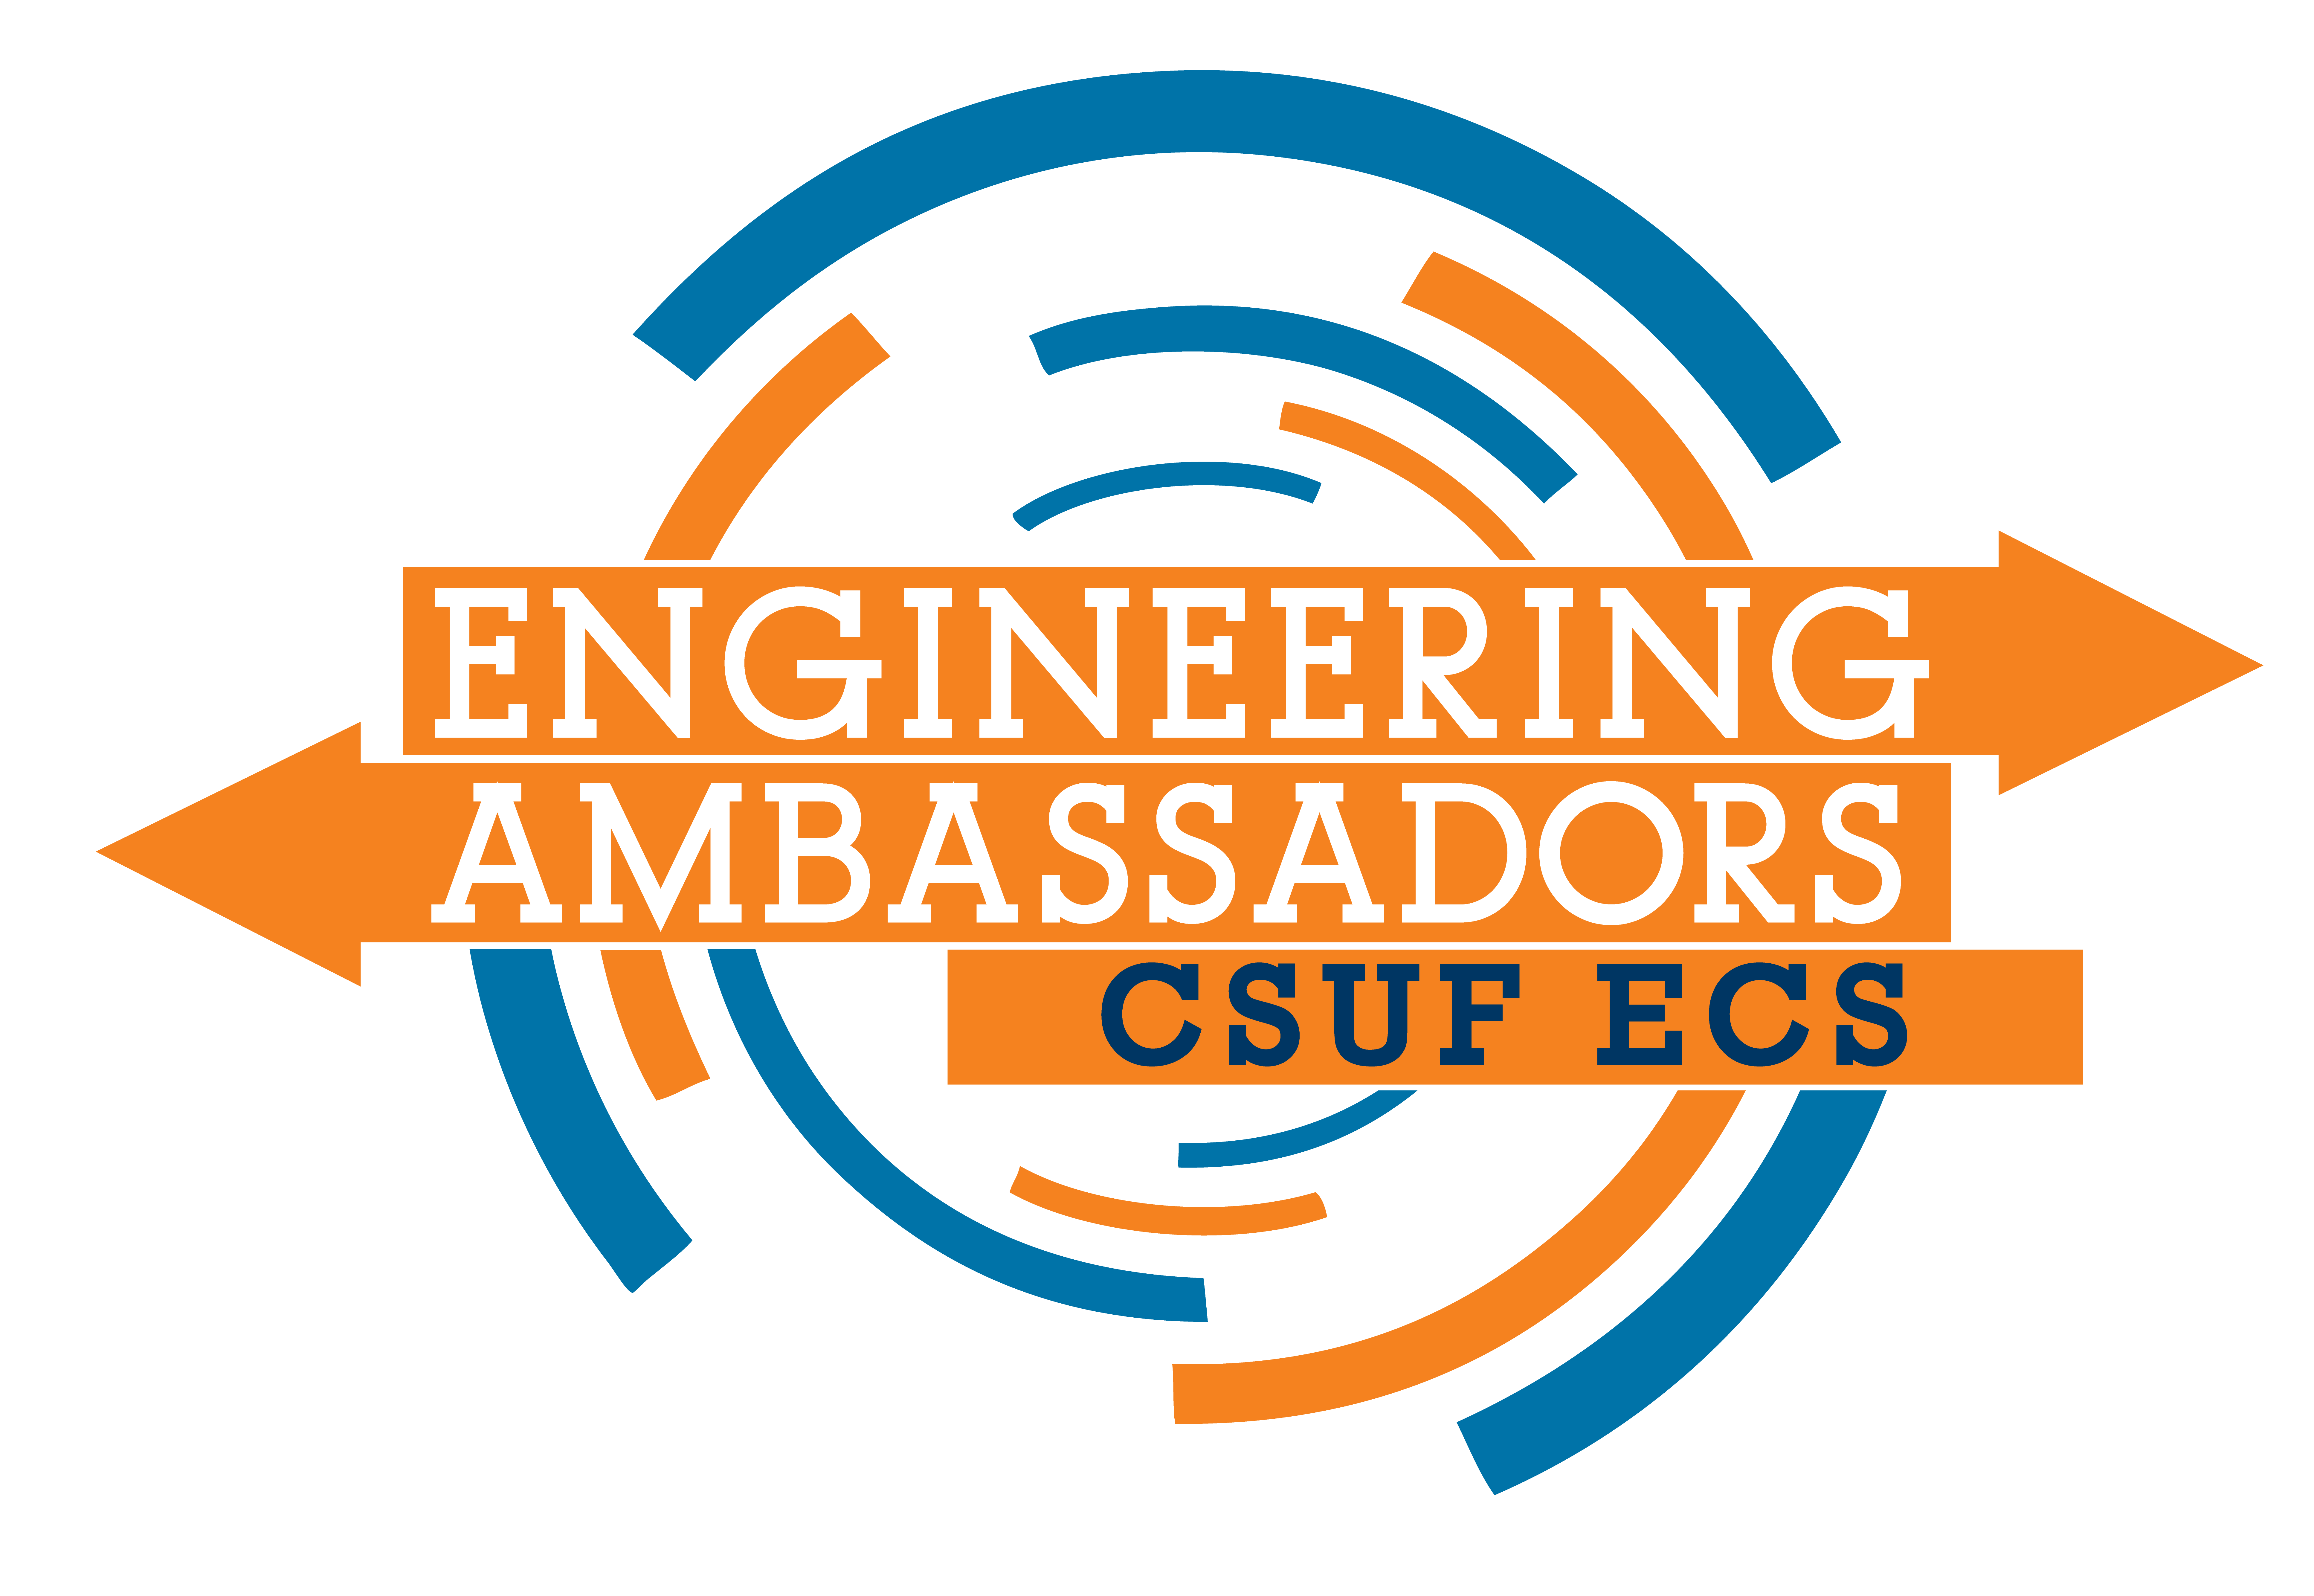 csuf ENGINEERING AMBASSADOR NETWORK logo